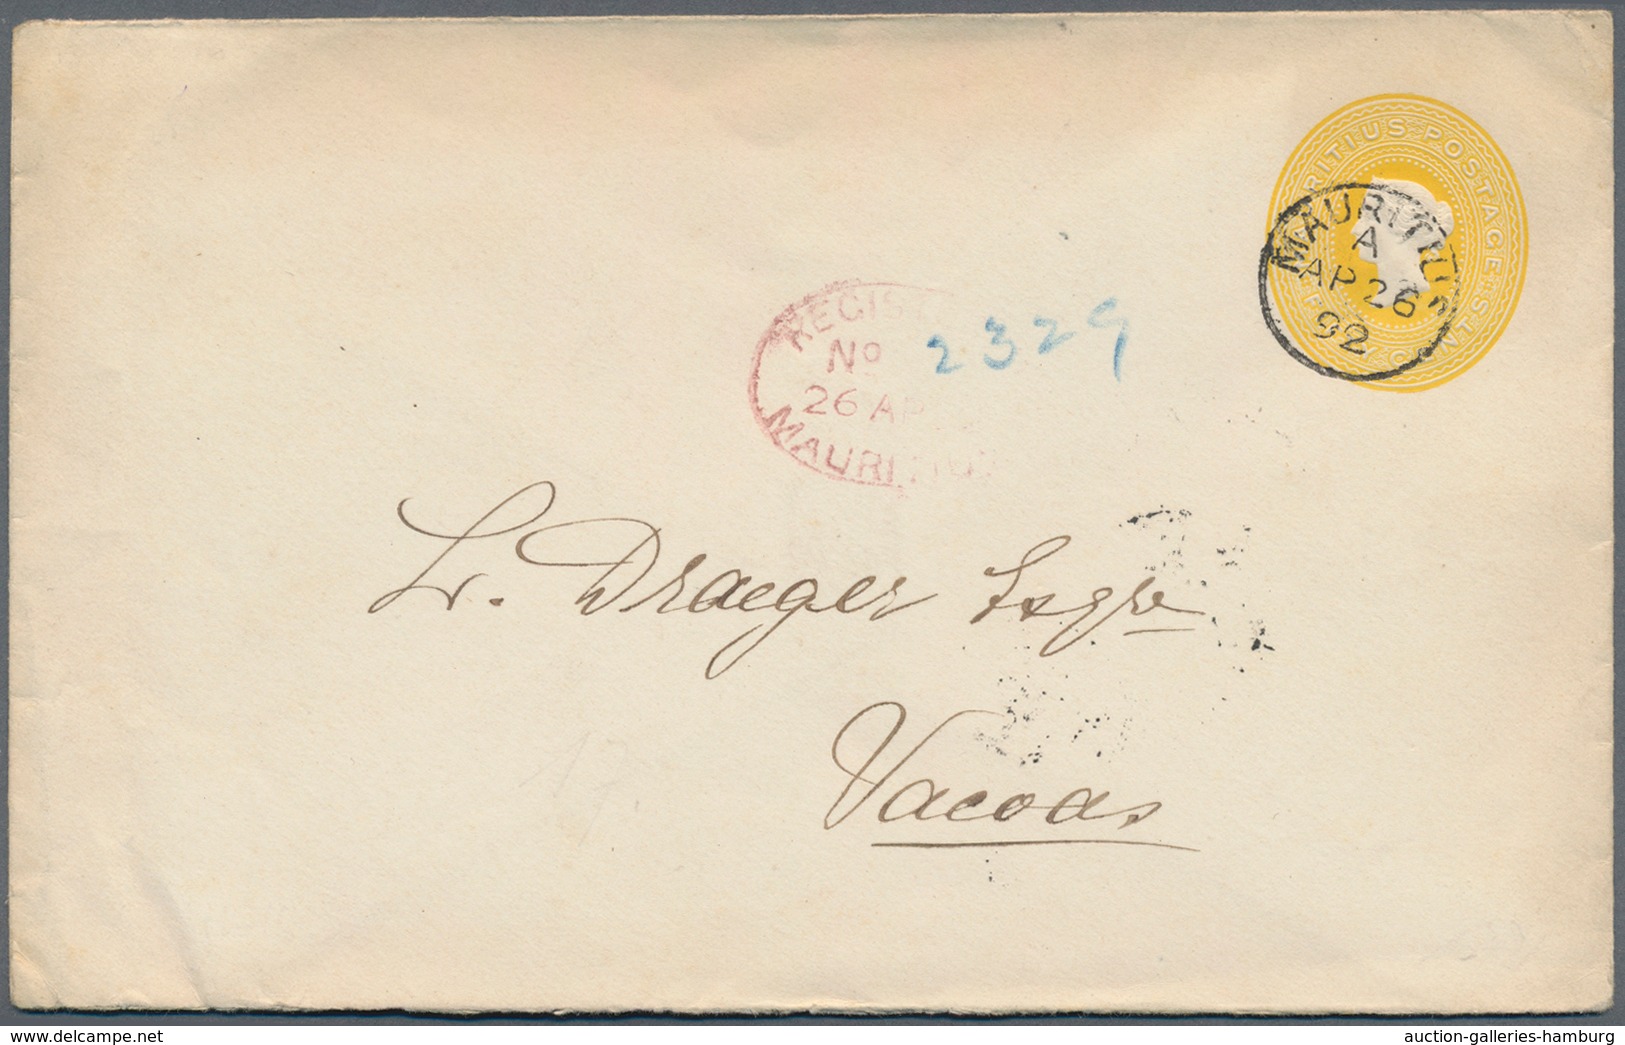 Mauritius: 1892. 50c Yellow Postal Stationery Envelope, Cancelled Mauritius A AP 26 92 And Oval Regi - Mauritius (...-1967)